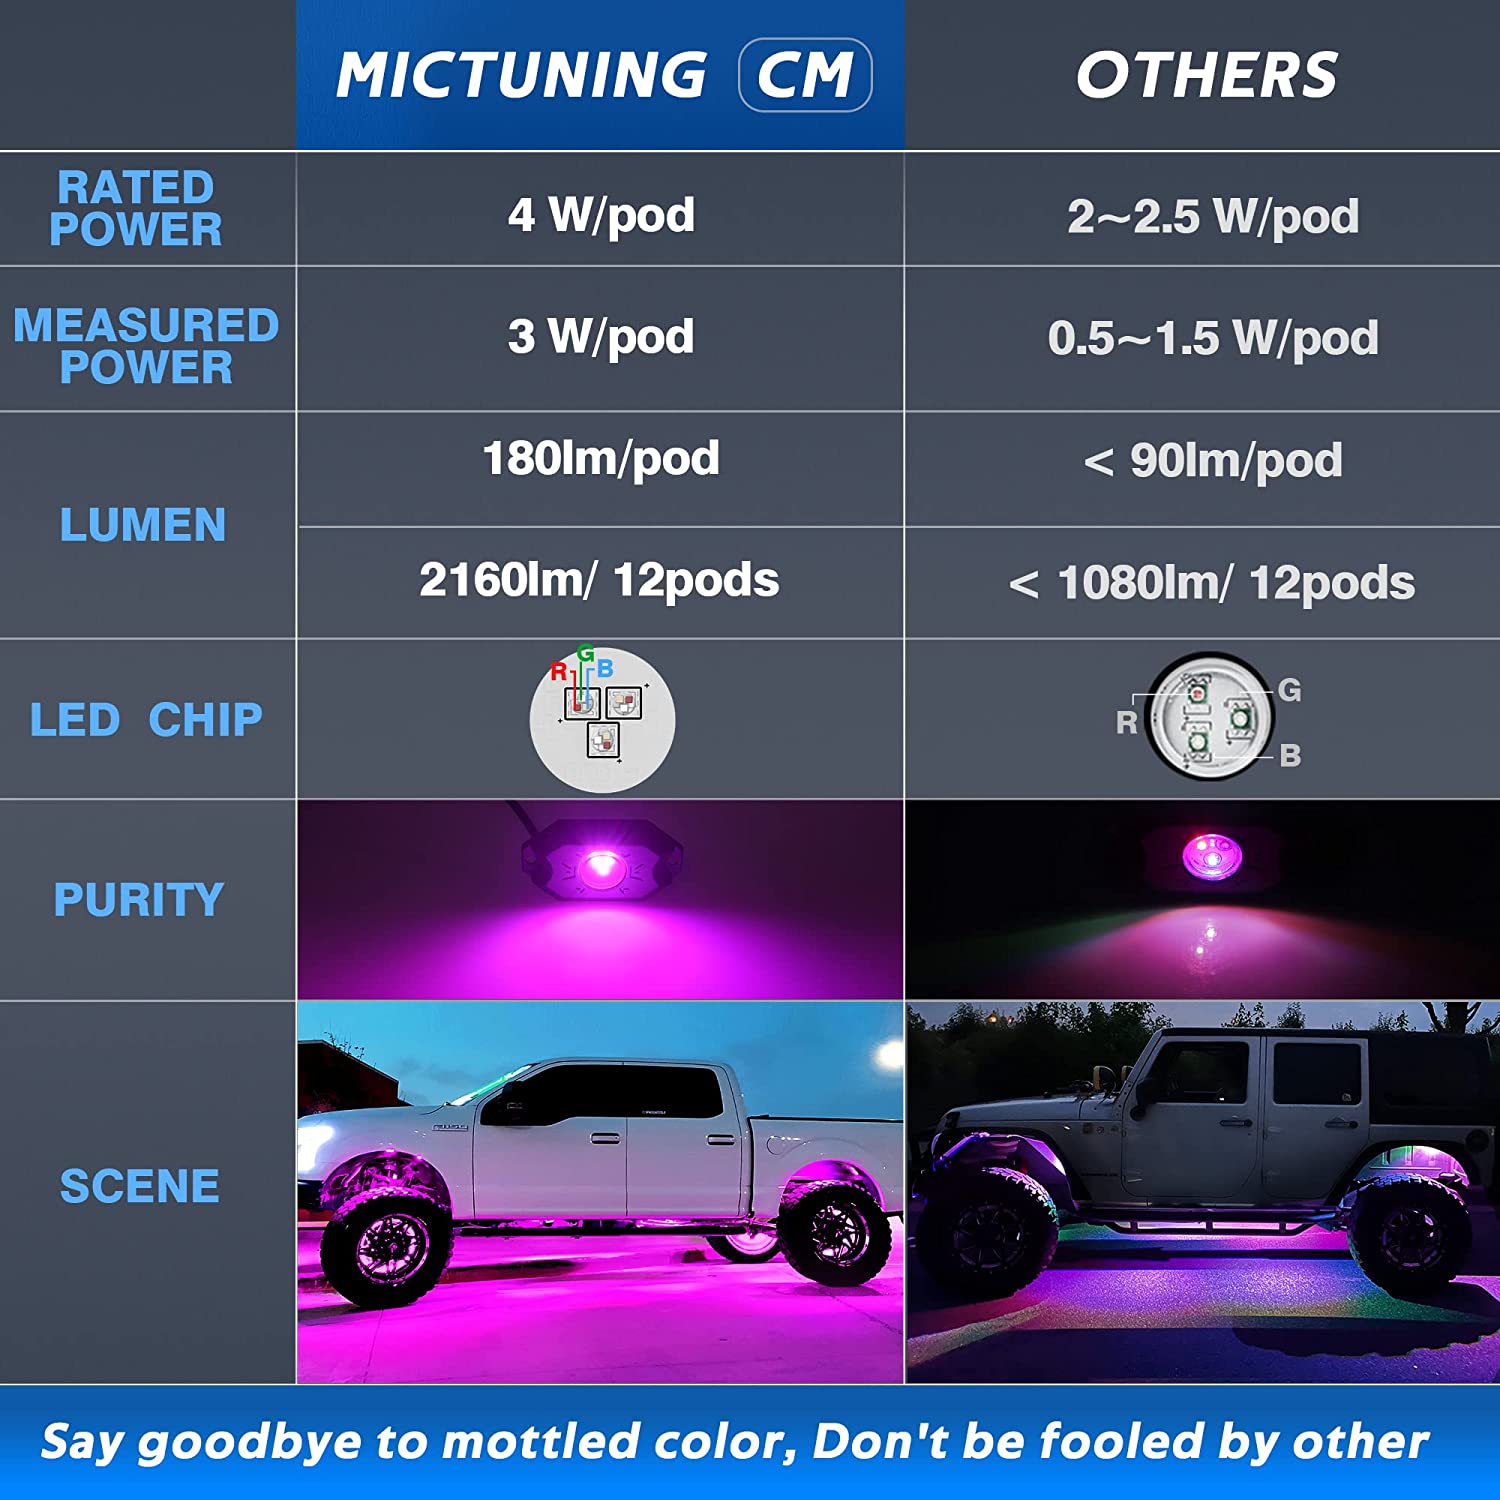 2023 Upgraded CM RGB LED Rock Lights Kits - 12 Pods Multicolor Neon Light